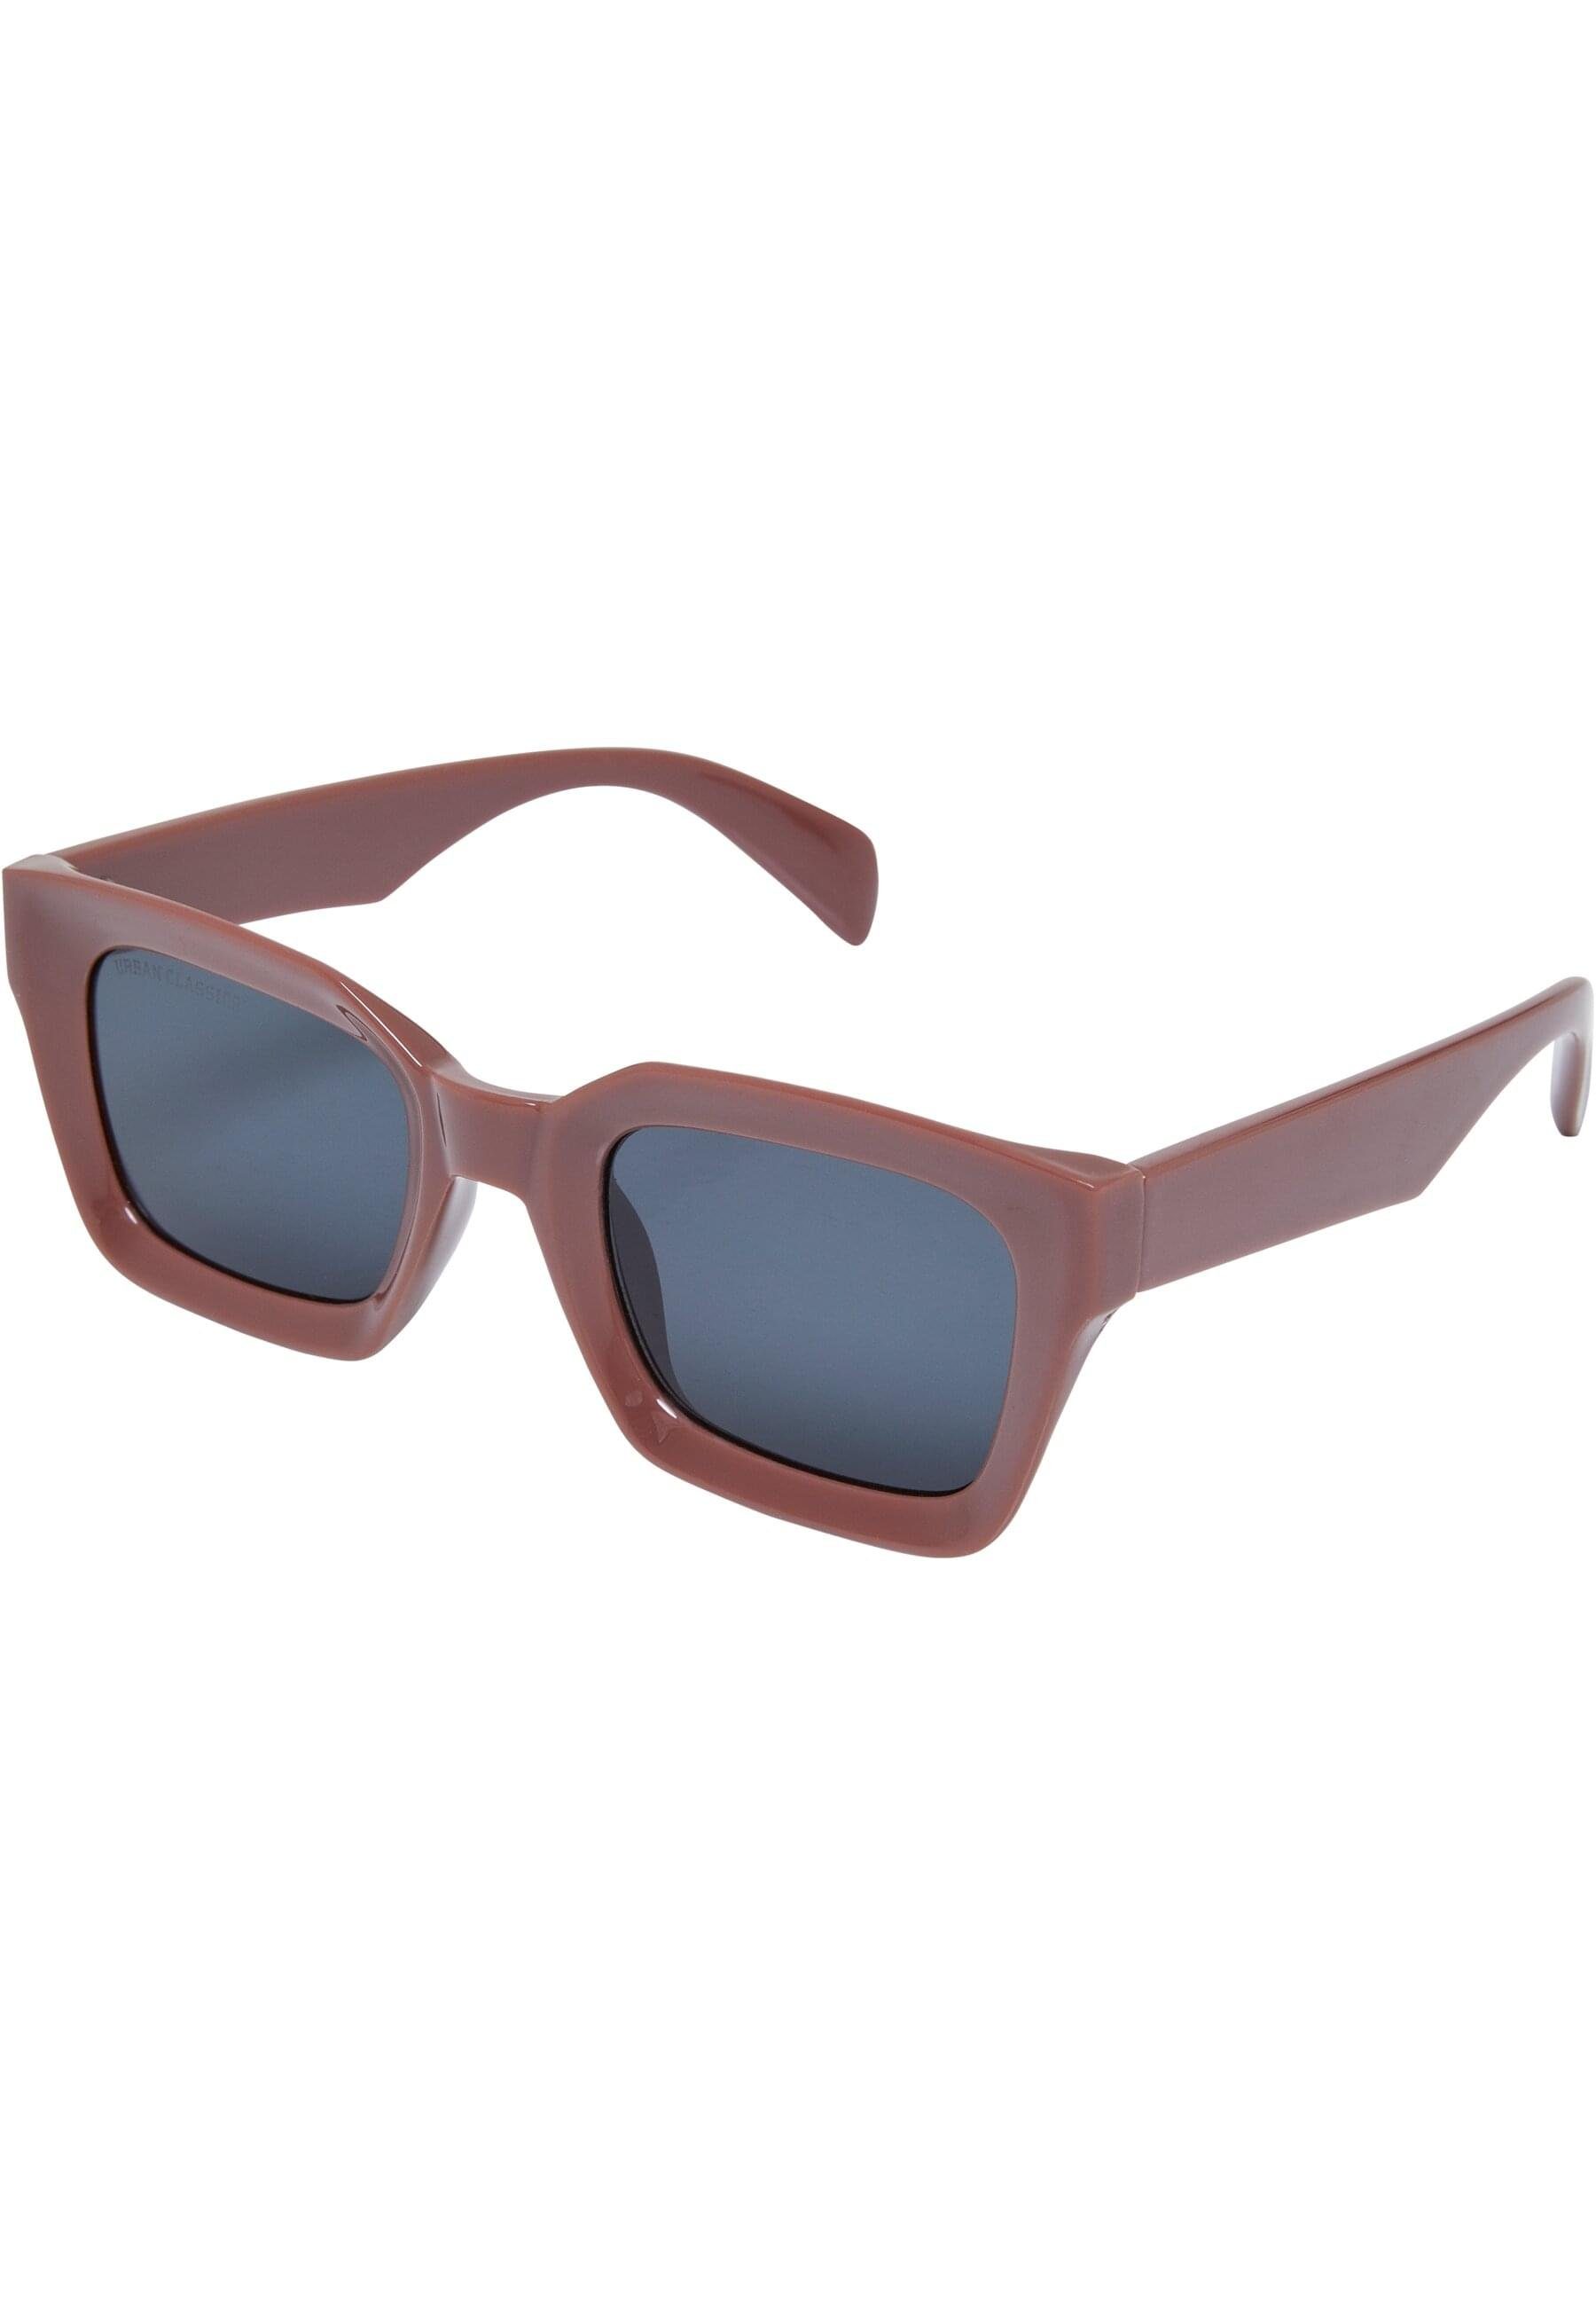 URBAN CLASSICS Sonnenbrille With Sunglasses Unisex Poros terracotta Chain